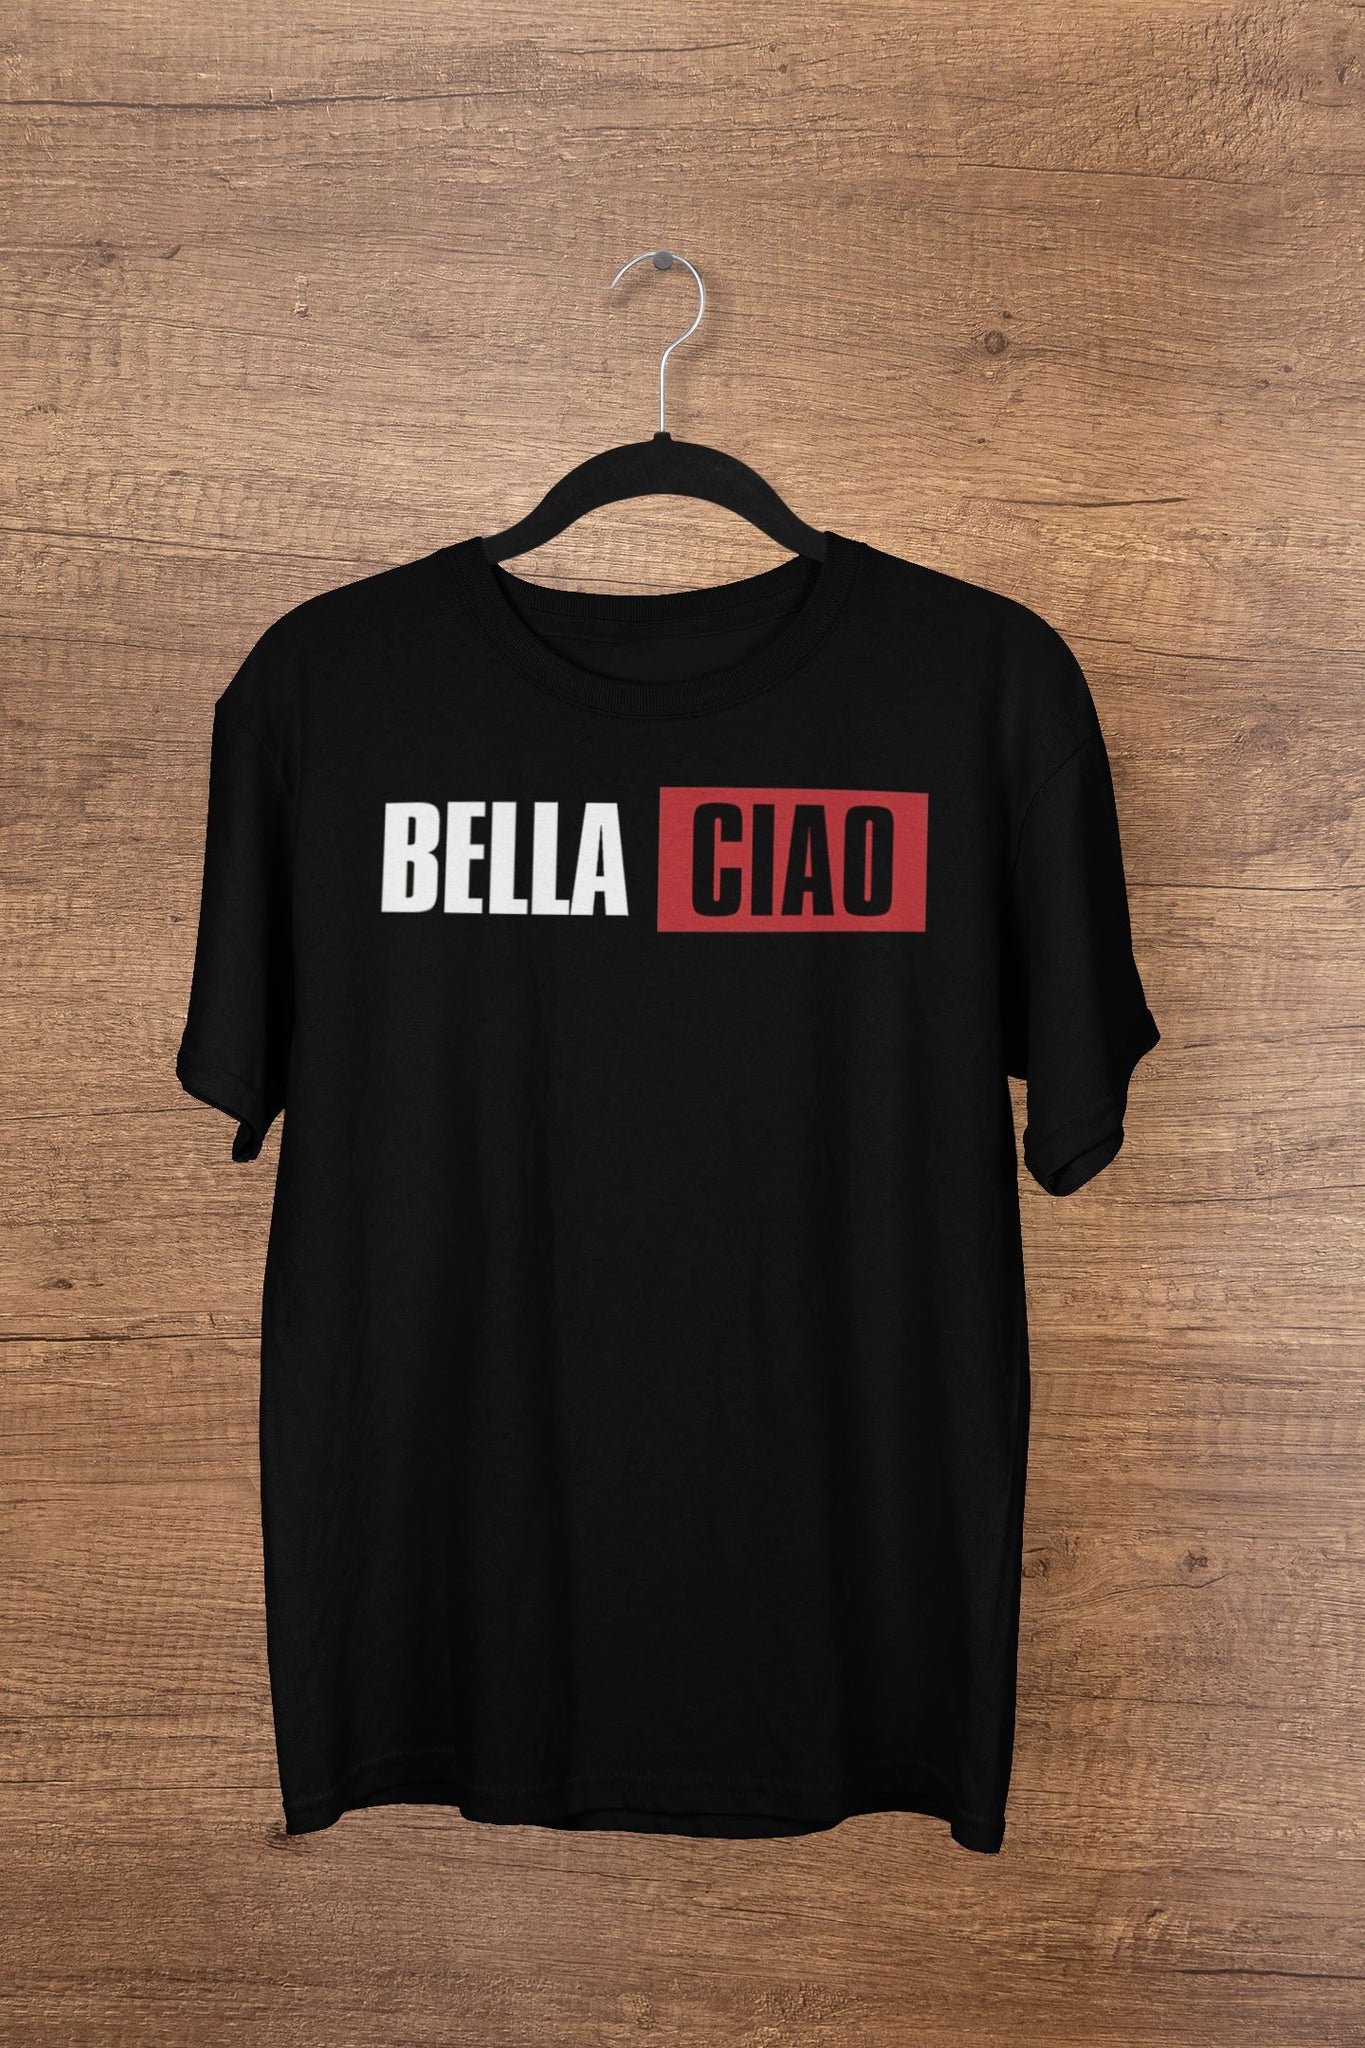 Bella Ciao T Shirt for Men and Women freeshipping - Catch My Drift India